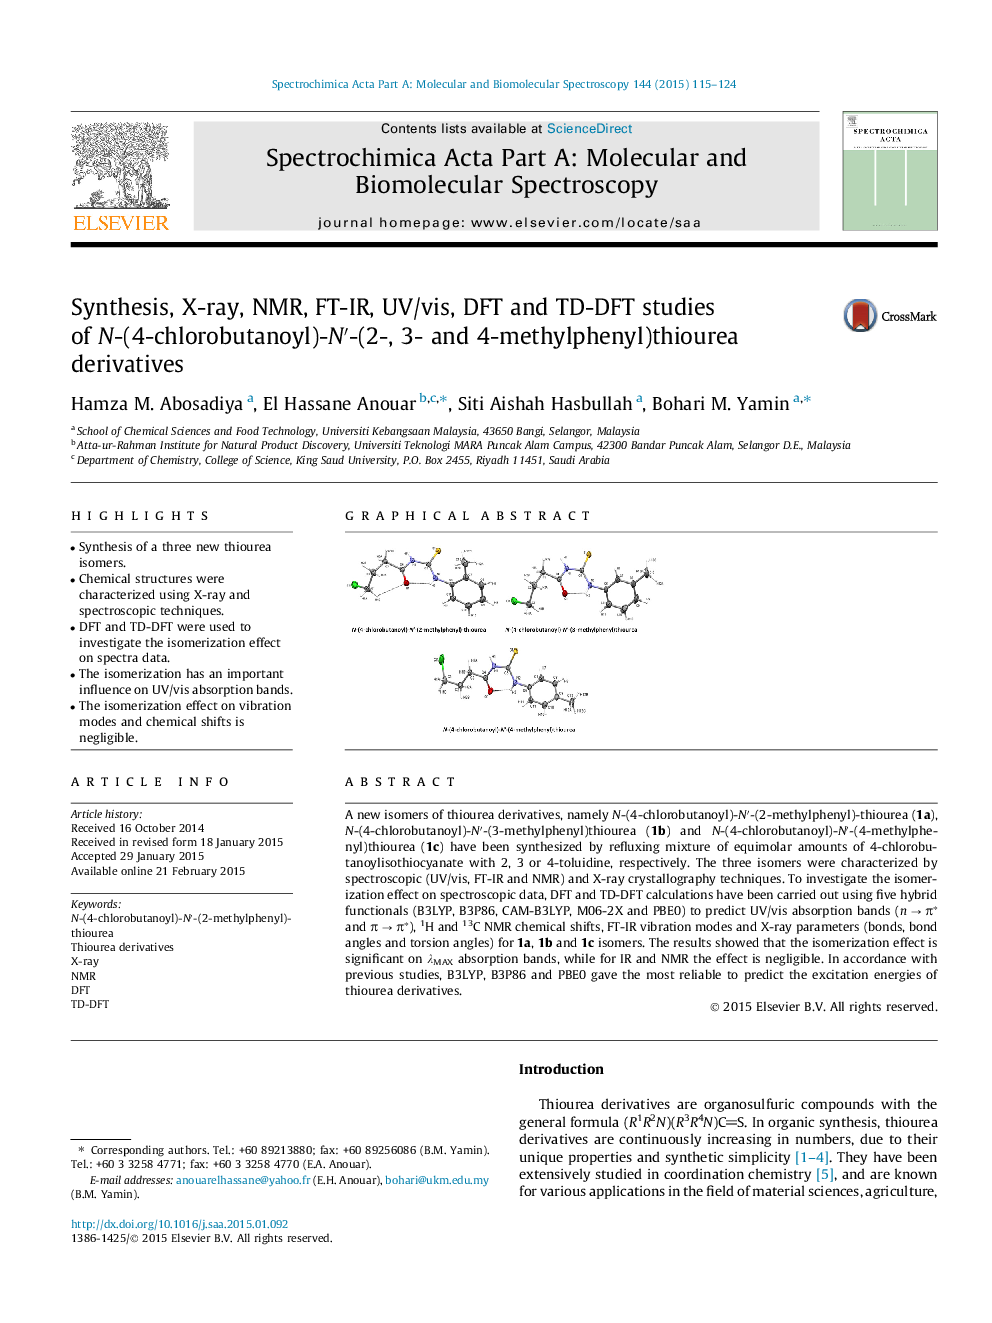 Synthesis, X-ray, NMR, FT-IR, UV/vis, DFT and TD-DFT studies of N-(4-chlorobutanoyl)-N′-(2-, 3- and 4-methylphenyl)thiourea derivatives